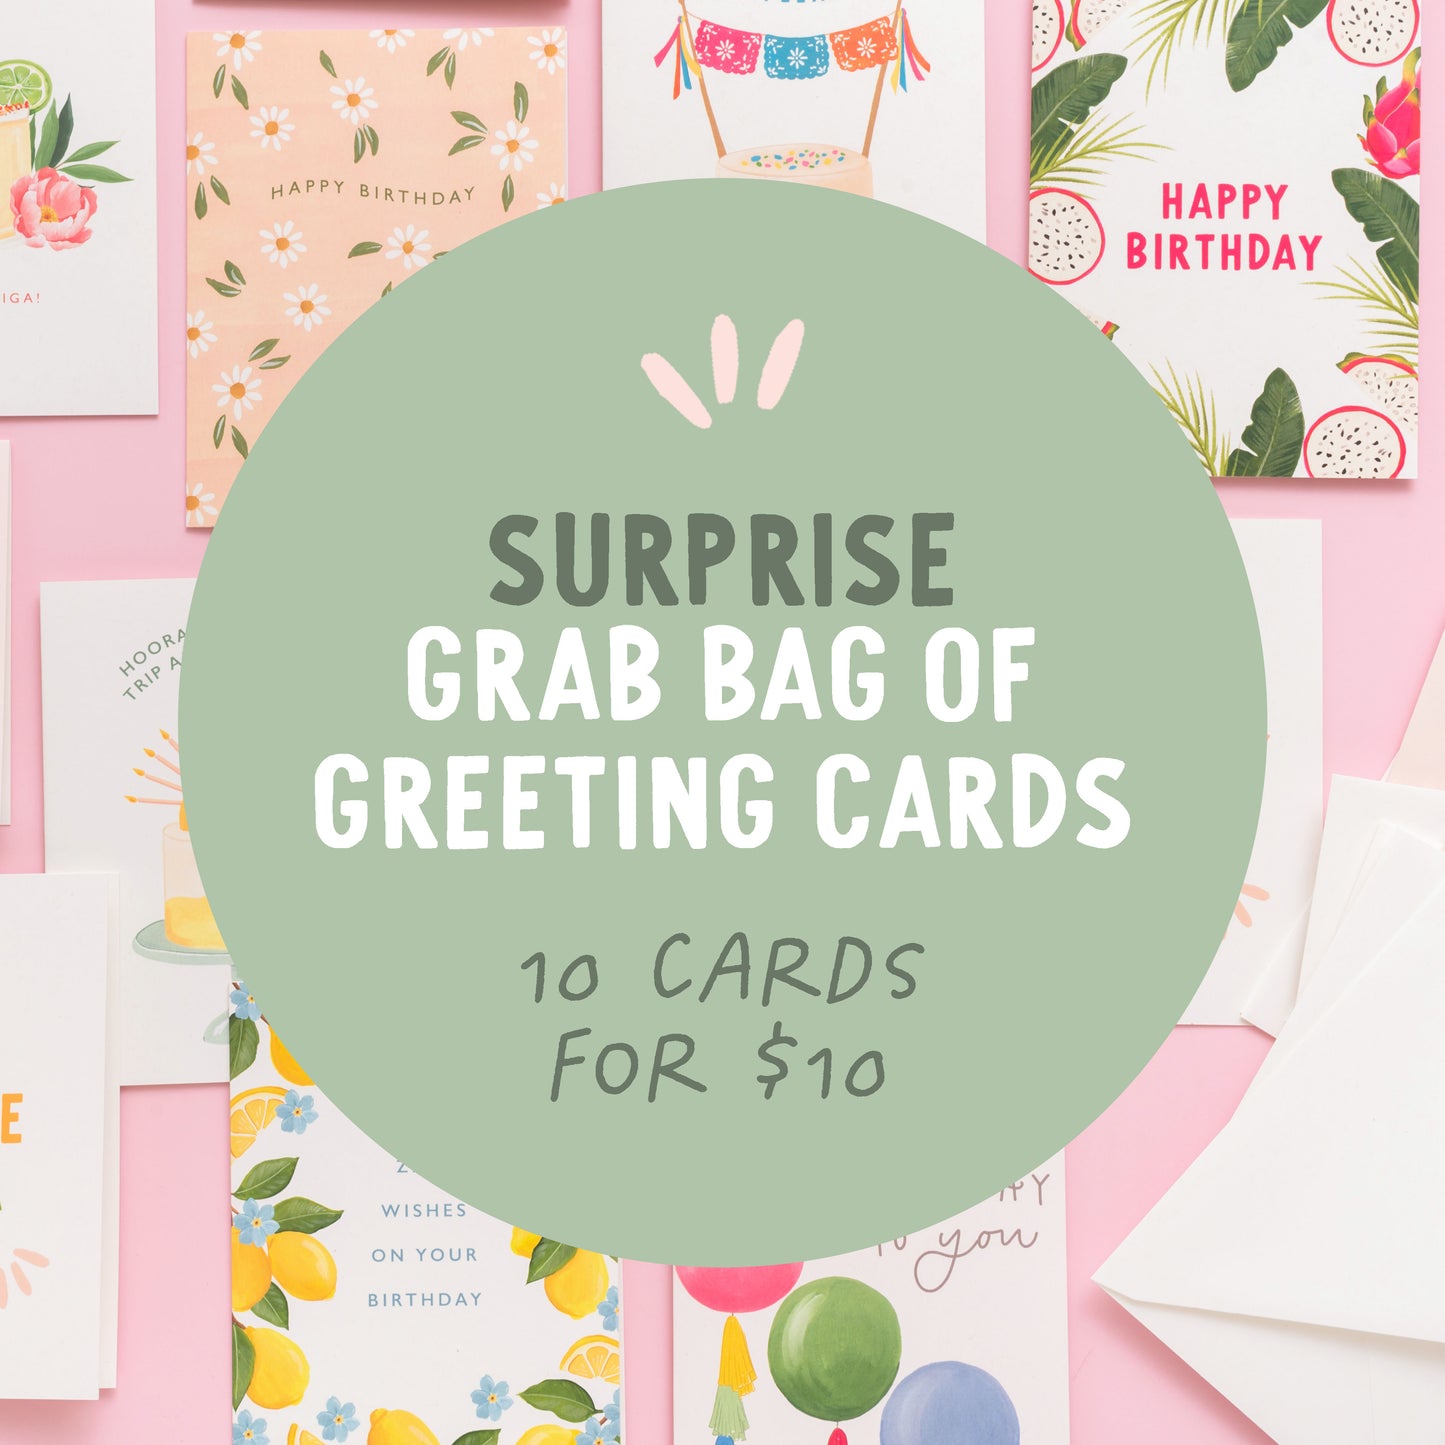 SURPRISE Grab Bag of Greeting Cards!